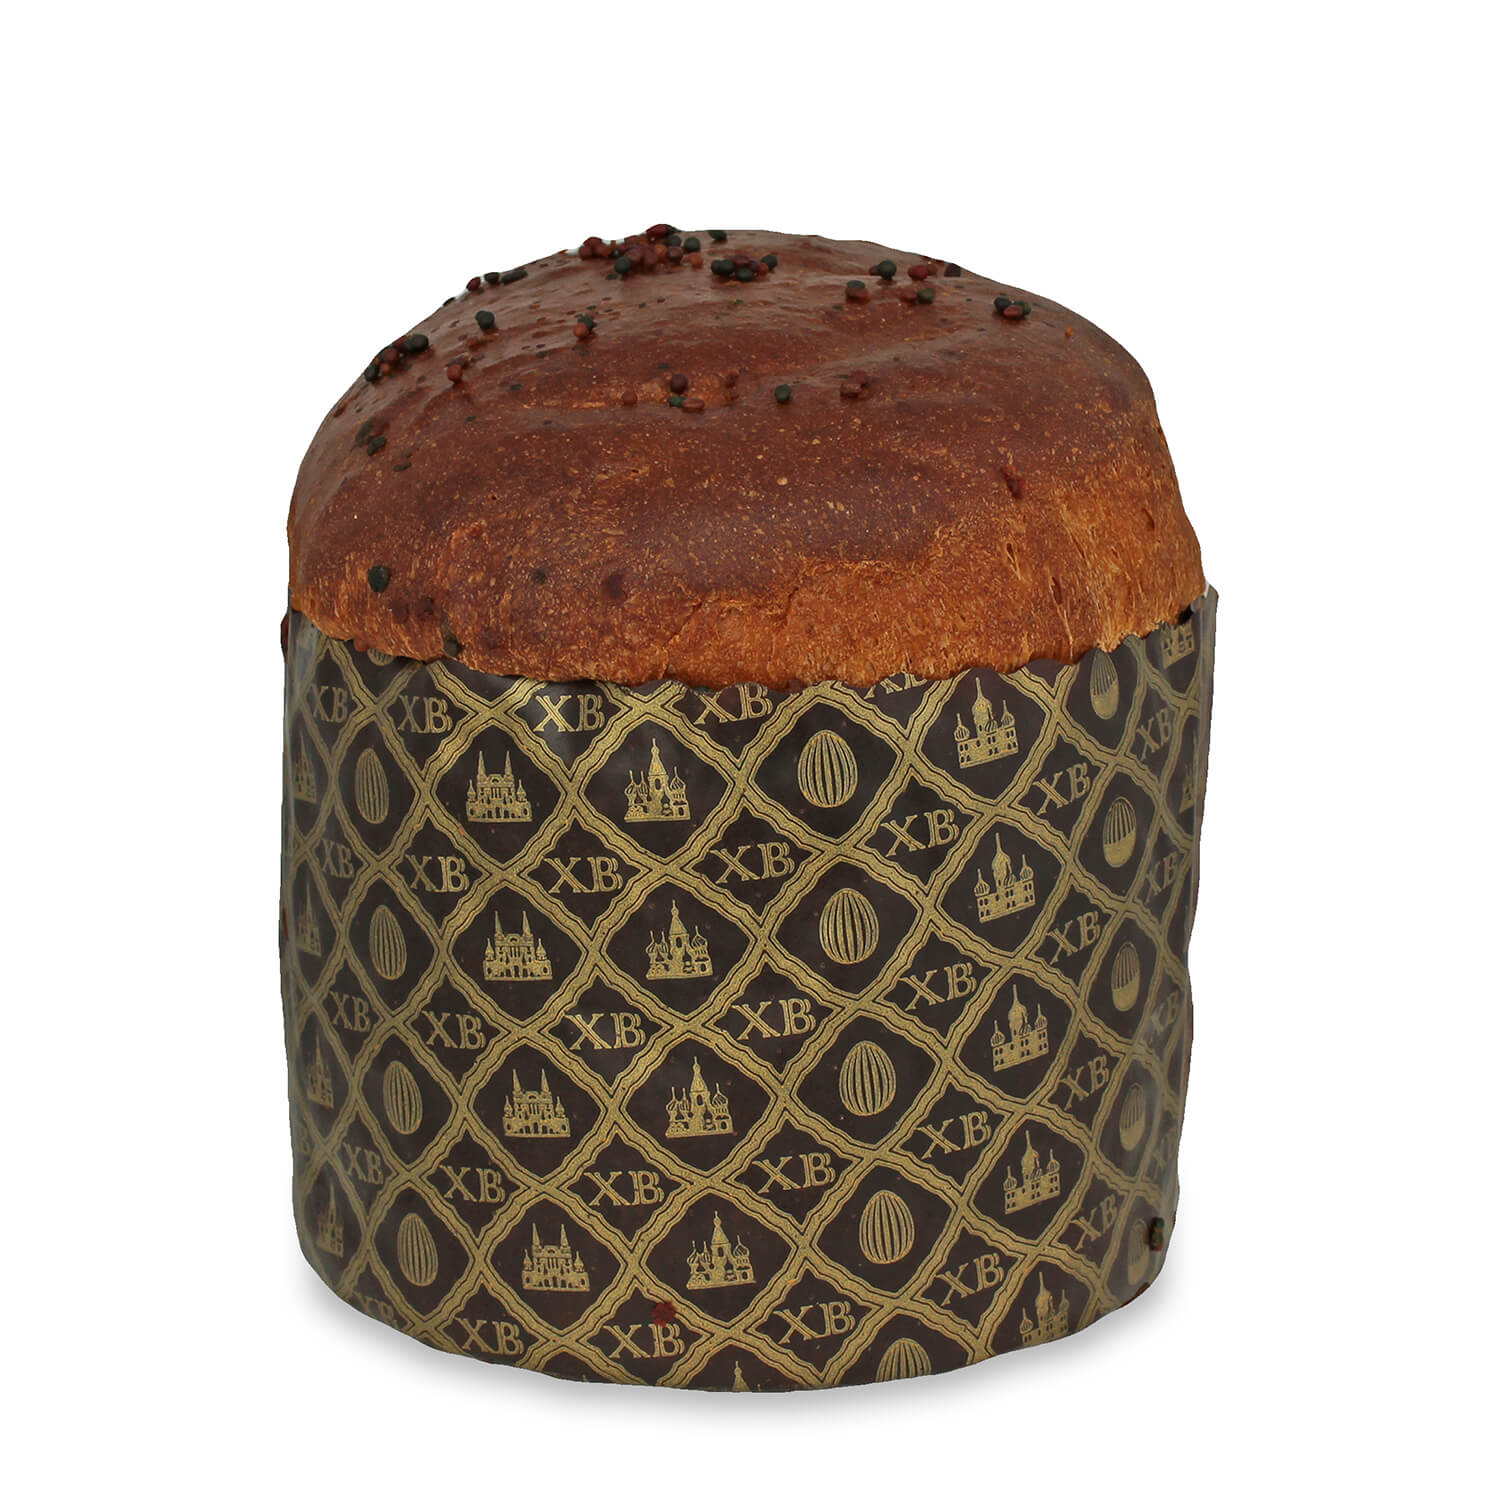 Tsar Bread Cake Paska Traditional 300g 2